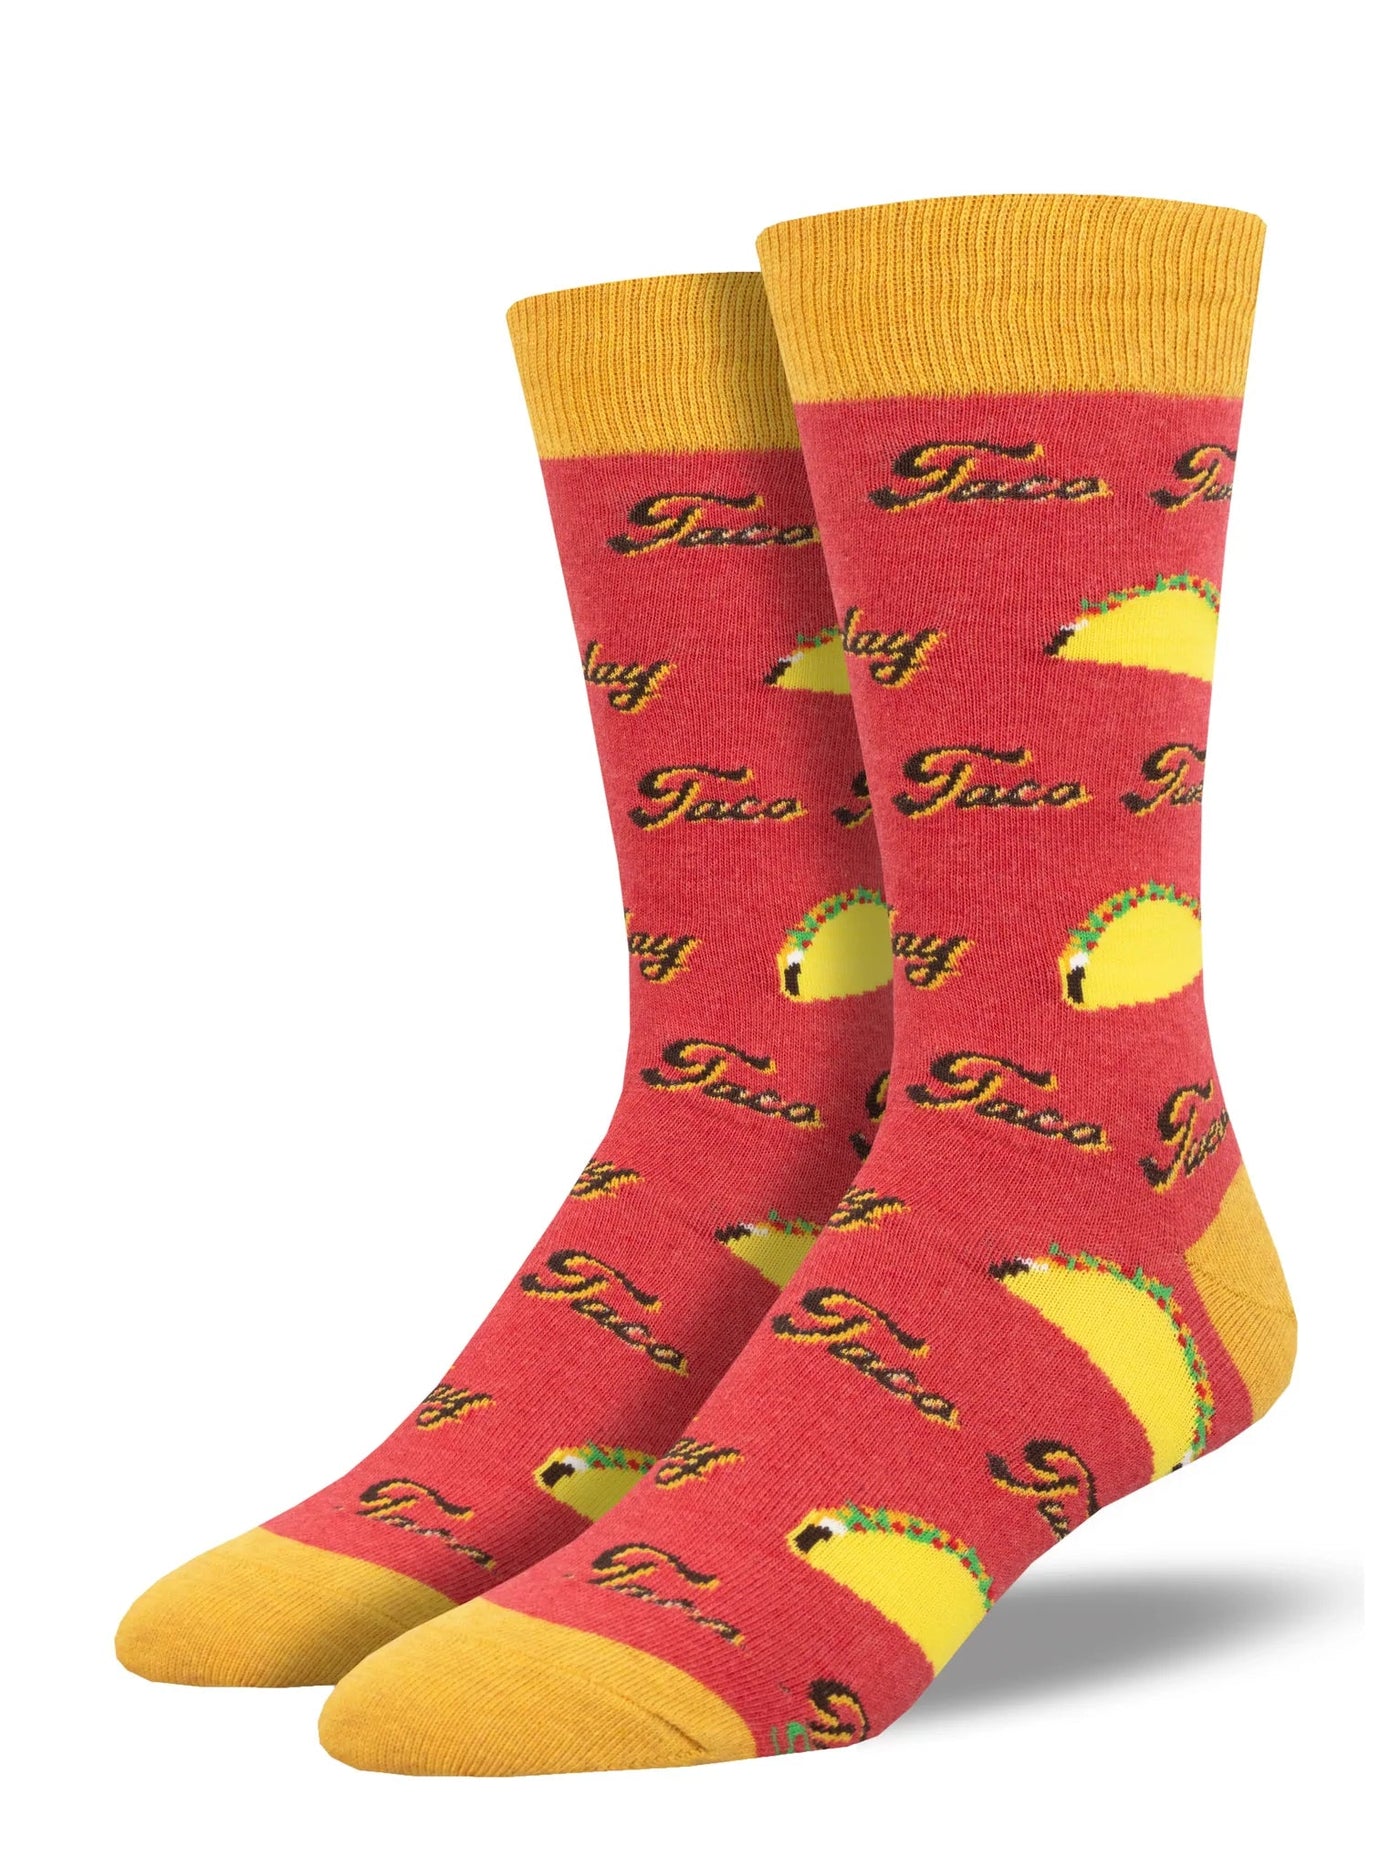 Taco Tuesday Crew Socks | Men's - Knock Your Socks Off